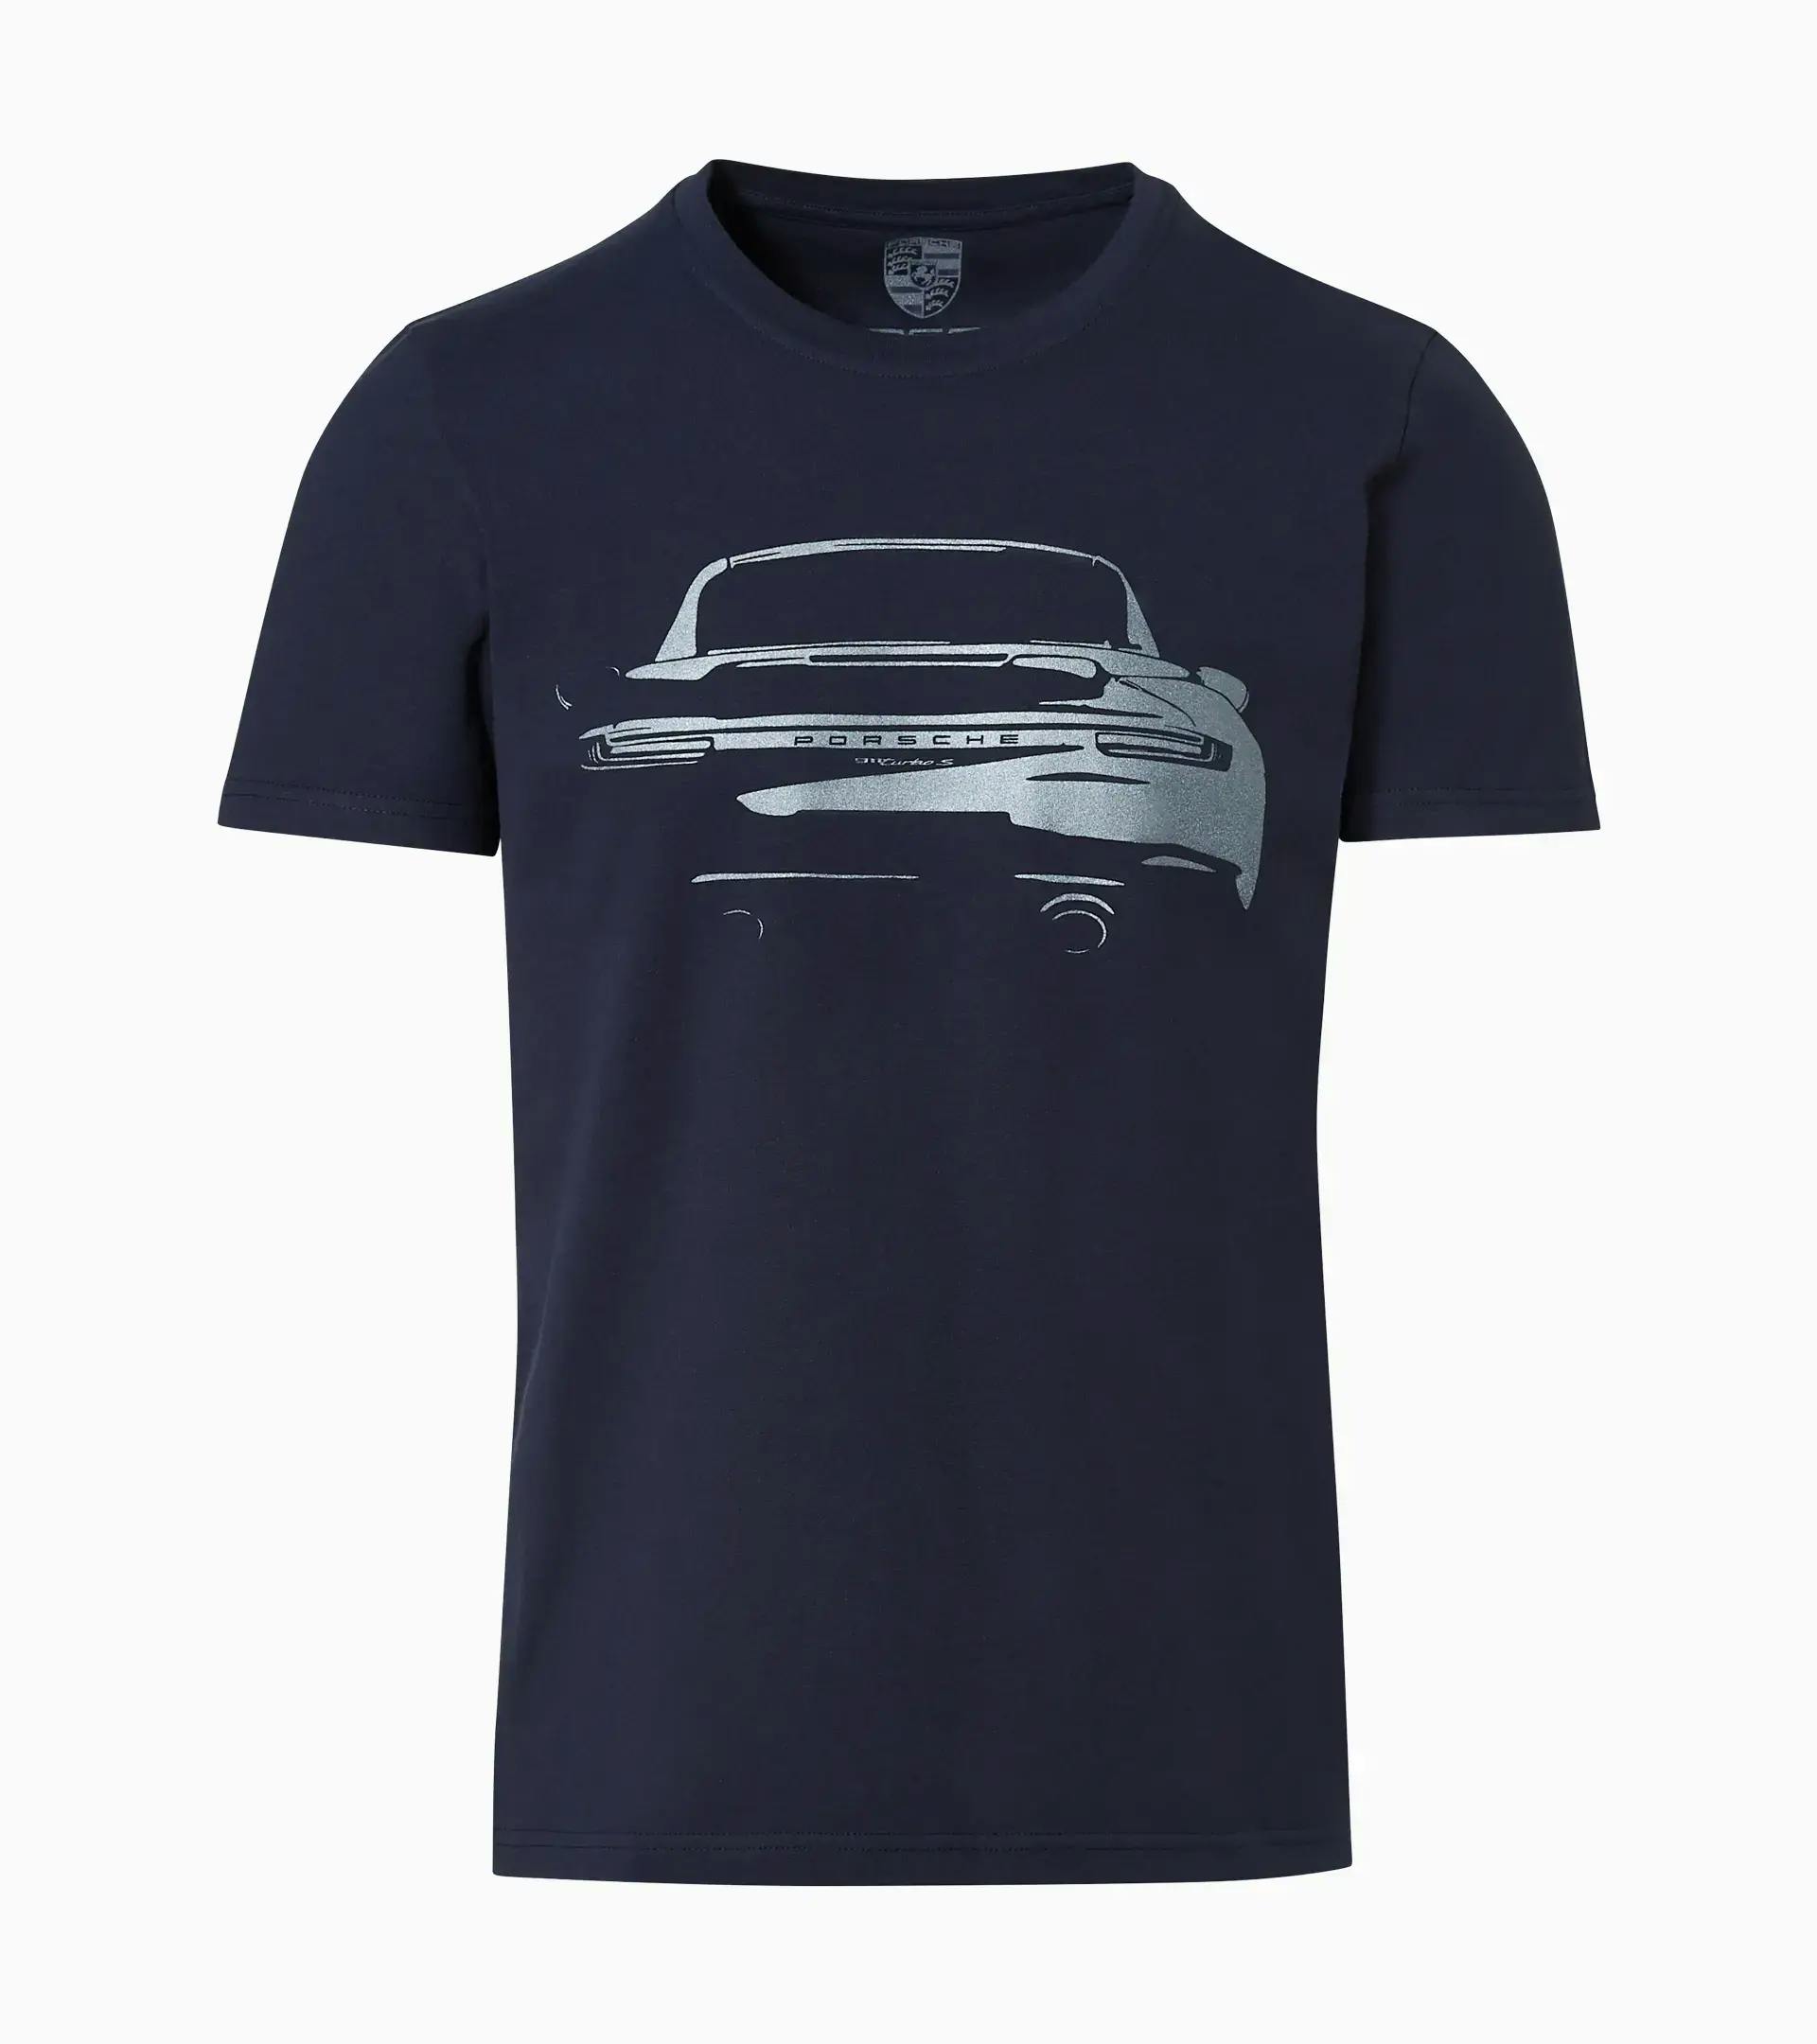 Collector's T-Shirt No. 17 unisex – 911 Turbo – Ltd. thumbnail 0